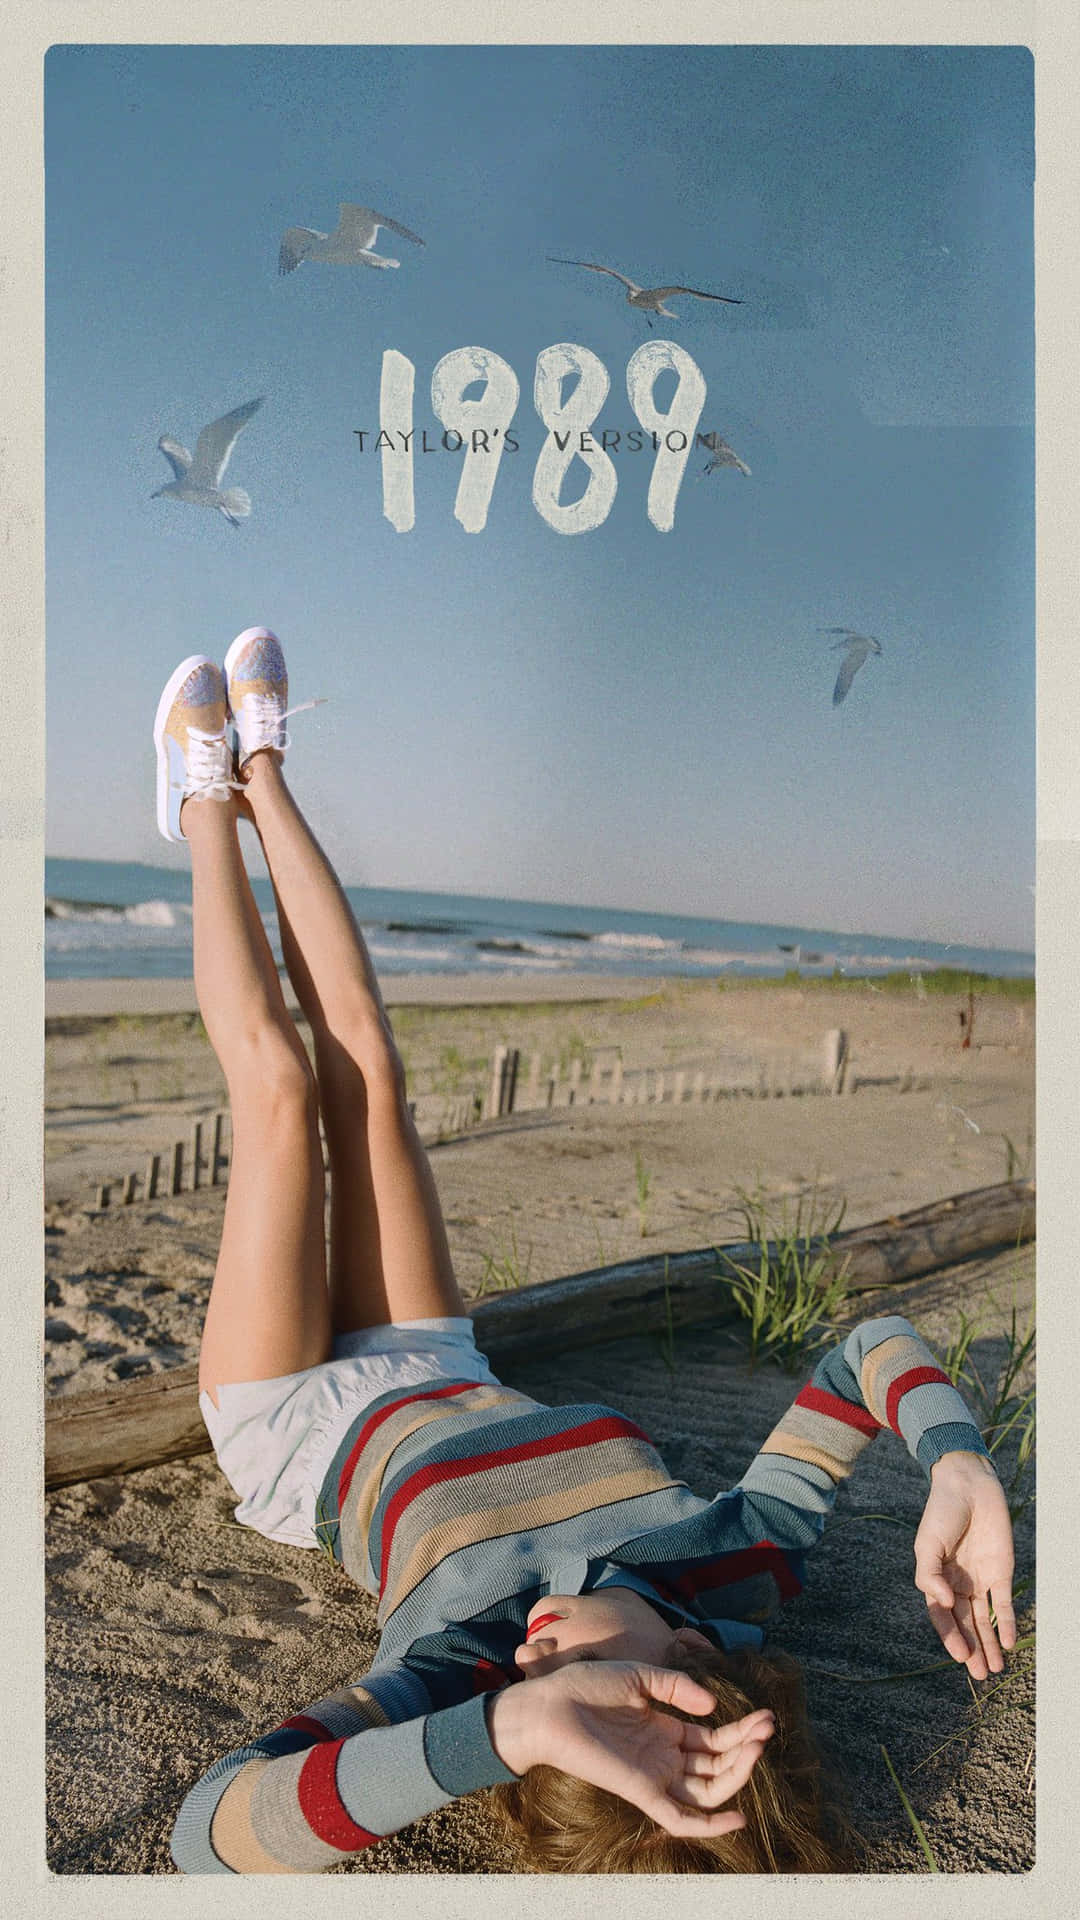 Beachside Relaxation1989 Taylors Version Wallpaper